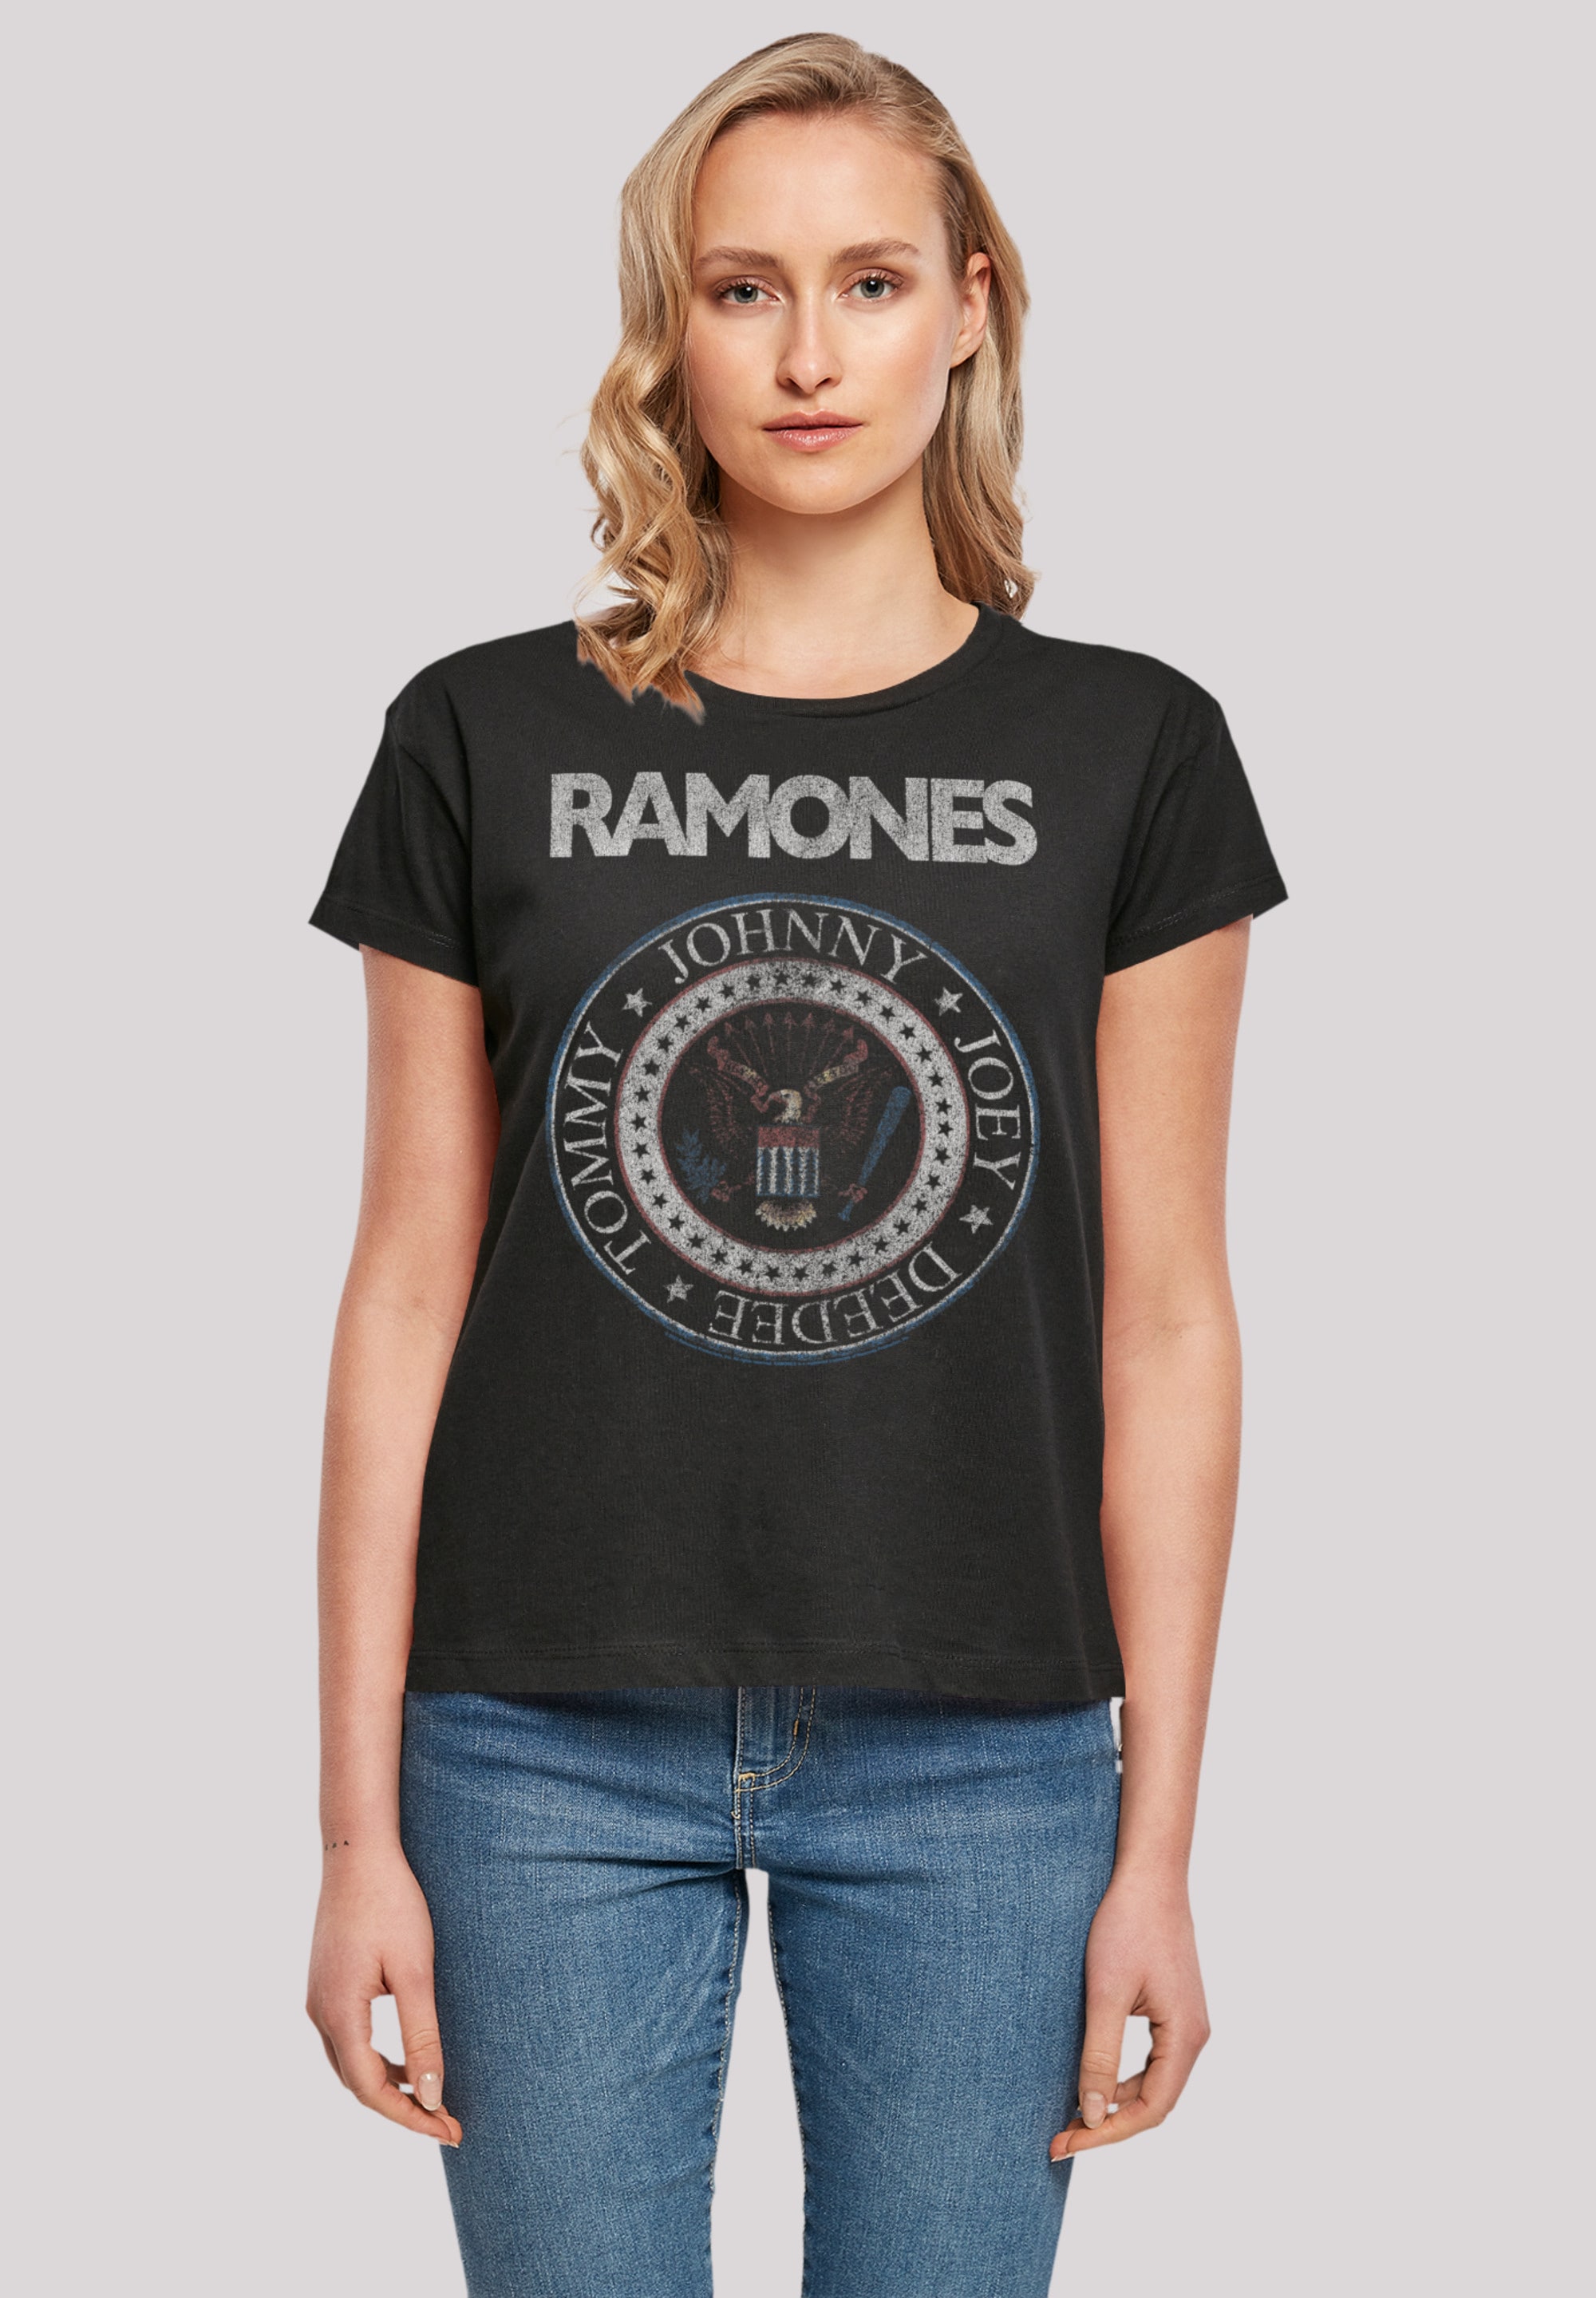 online »Ramones T-Shirt And Musik I\'m Qualität, walking Band Red kaufen Premium Rock Seal«, F4NT4STIC White Band, | Rock-Musik